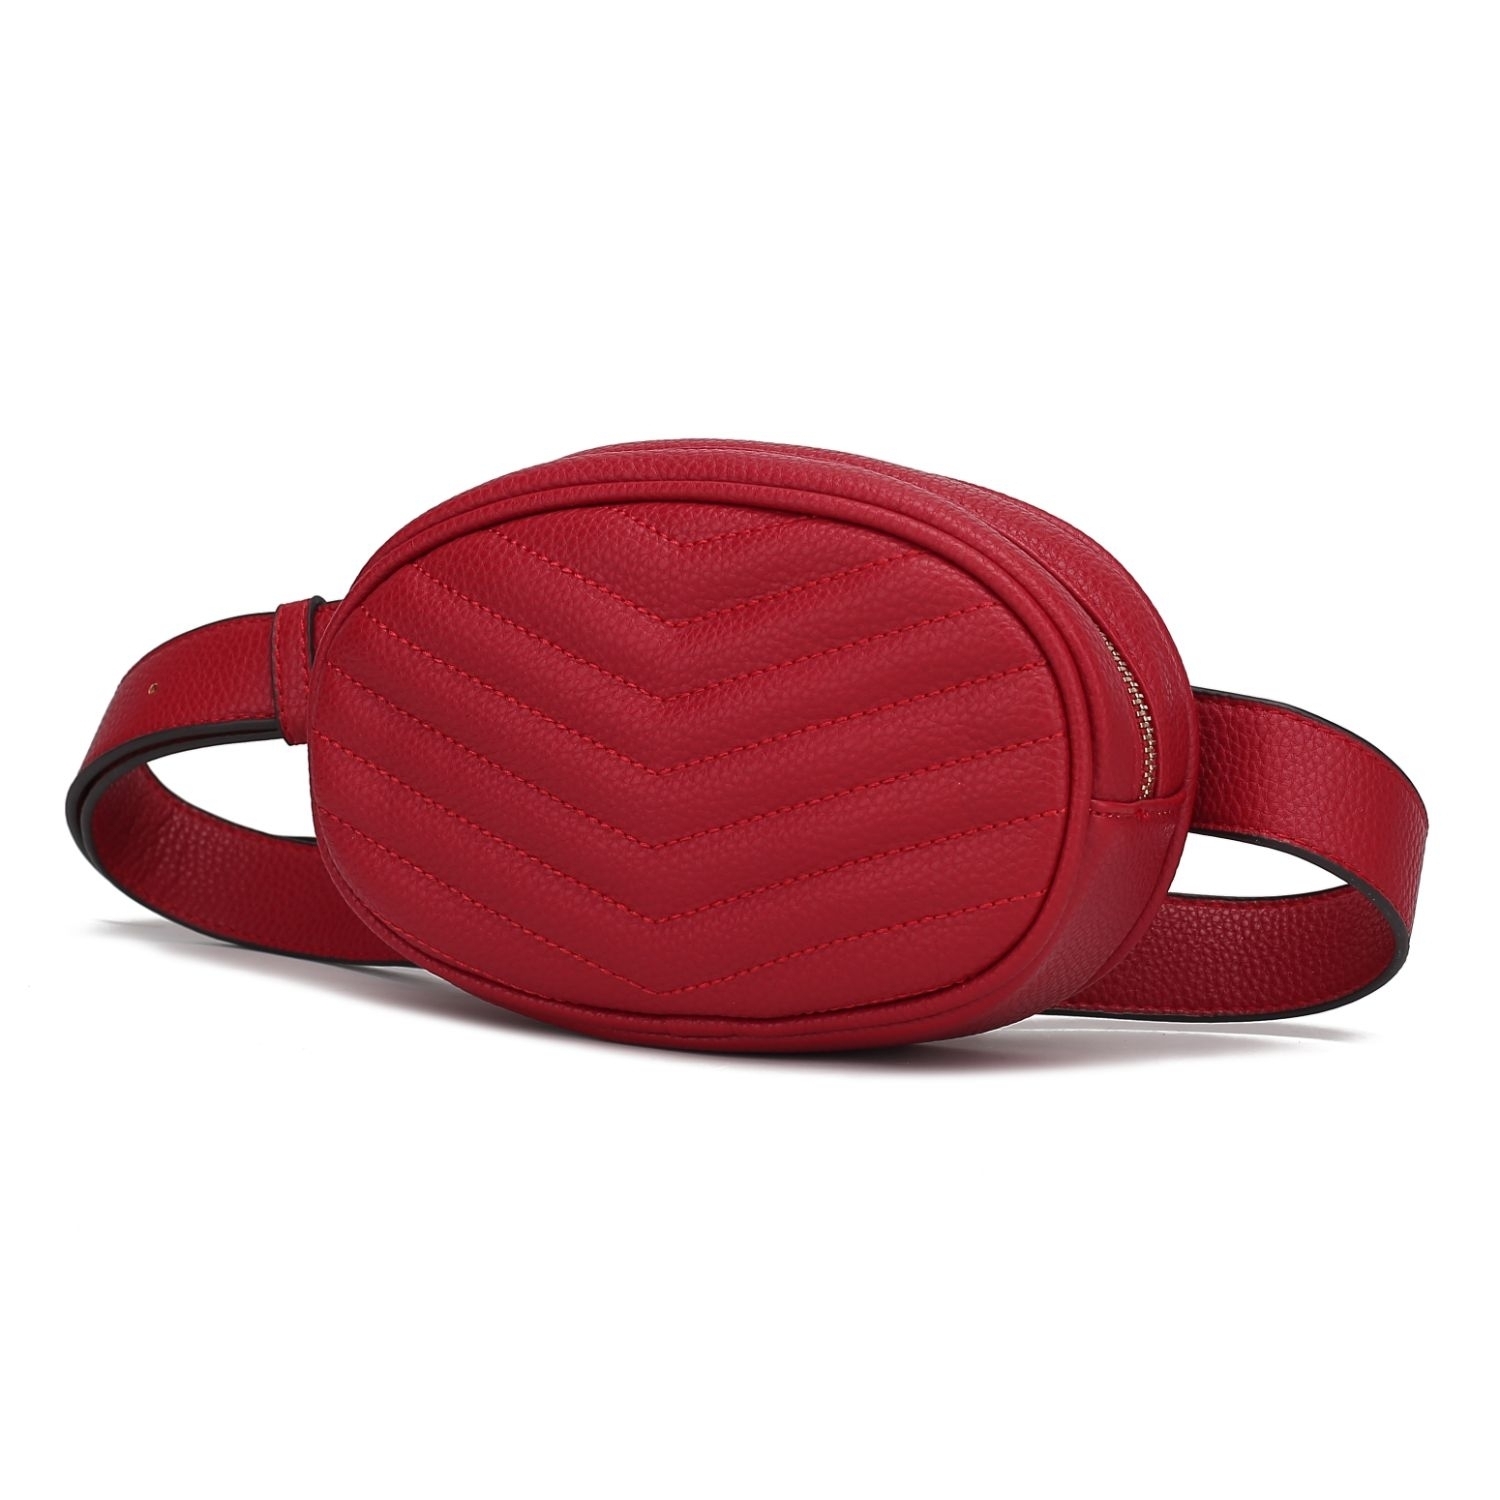 MKF Collection Fatima Quilted Chevron Women’s Belt Handbag By Mia K. - Red